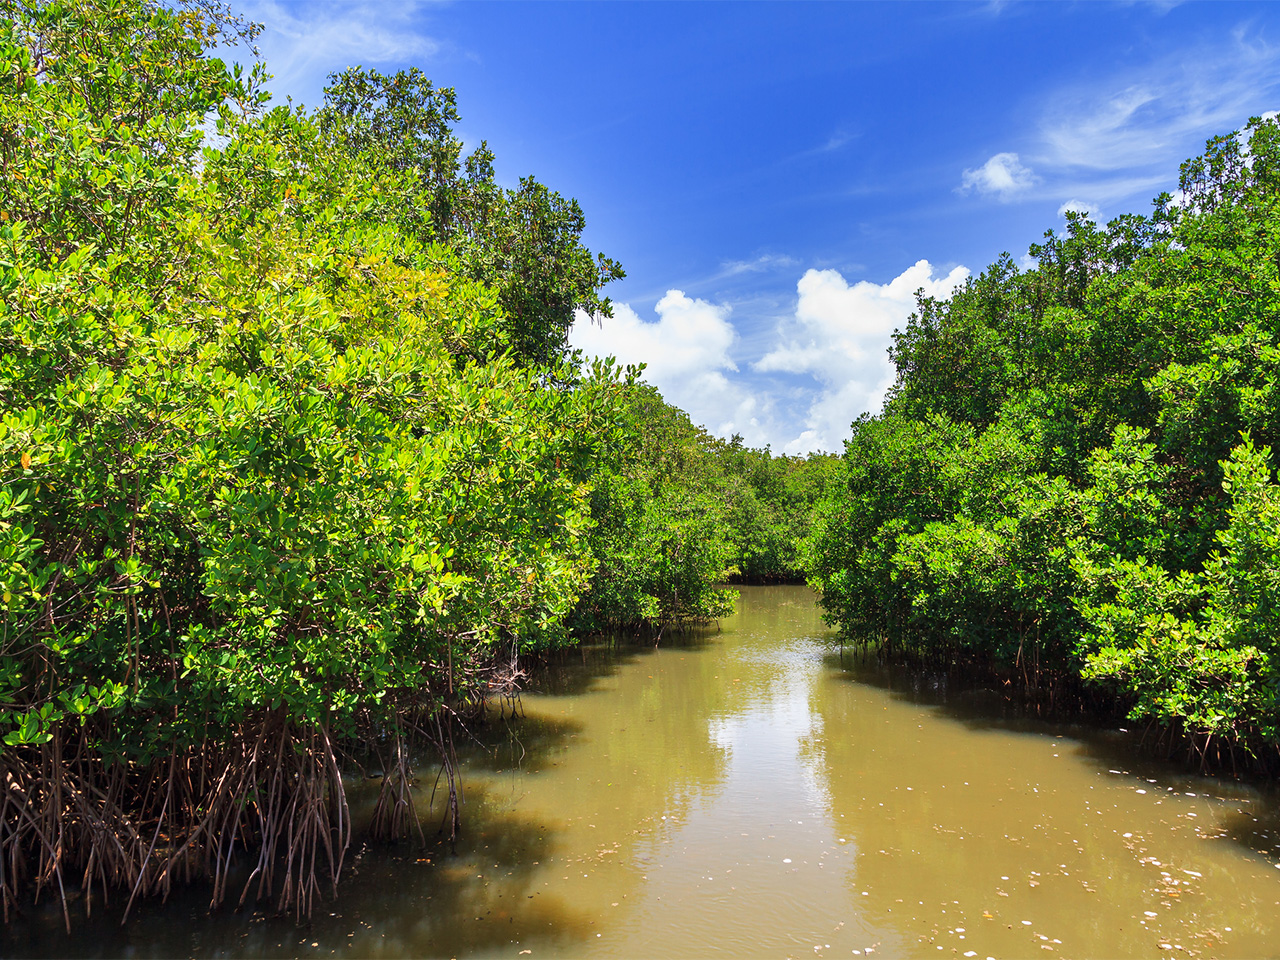 Mangroves along a river in Puerto Rico.